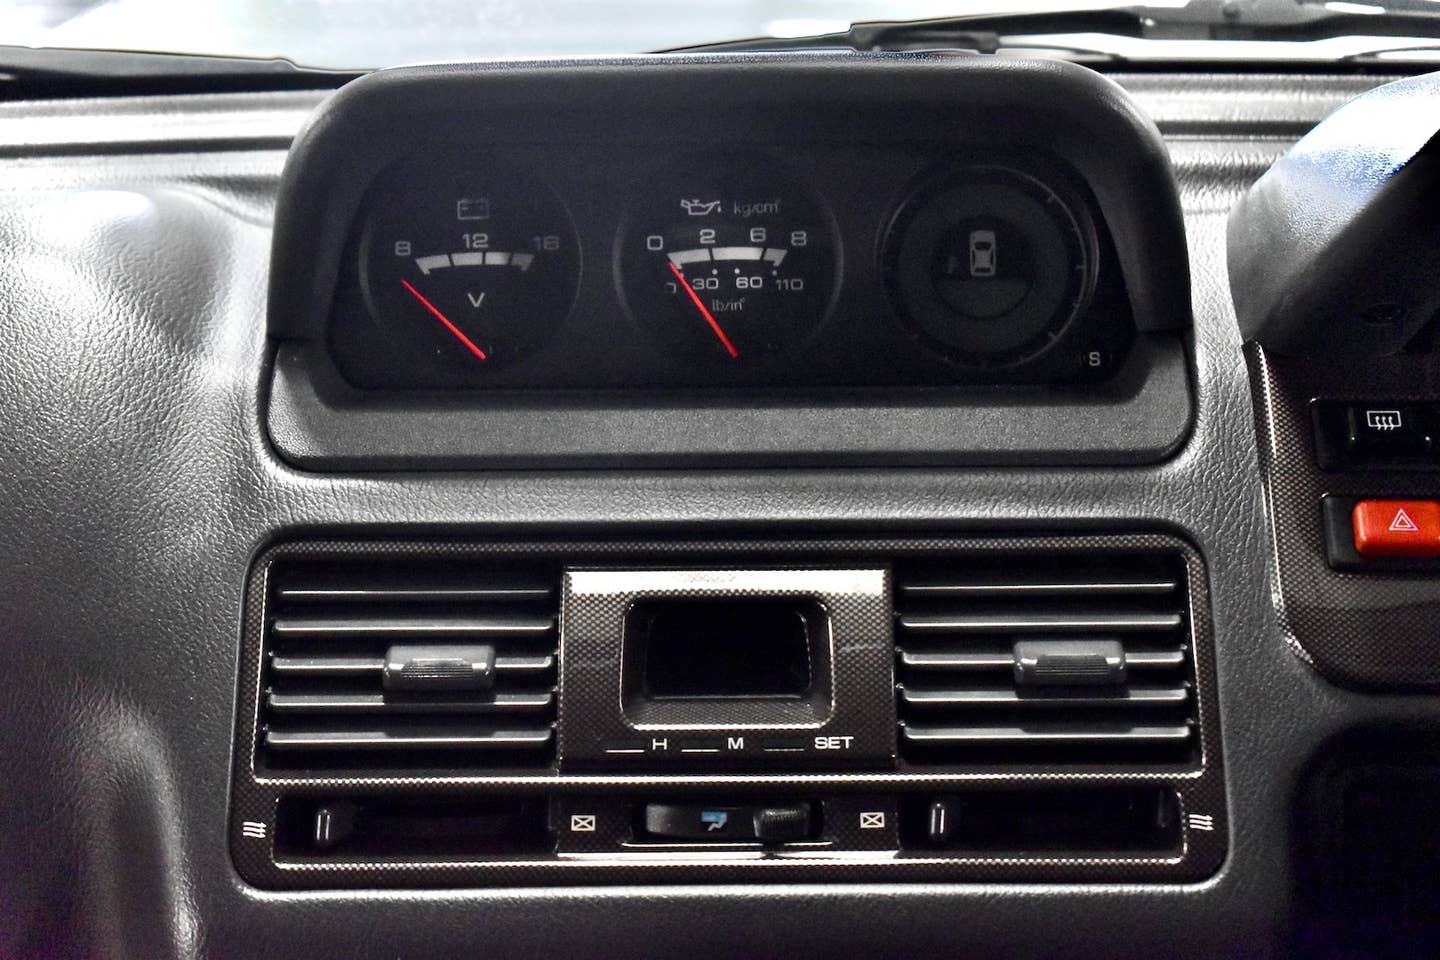 1997 Mitsubishi Pajero Evolution voltmeter, fuel pressure gauge, and compass